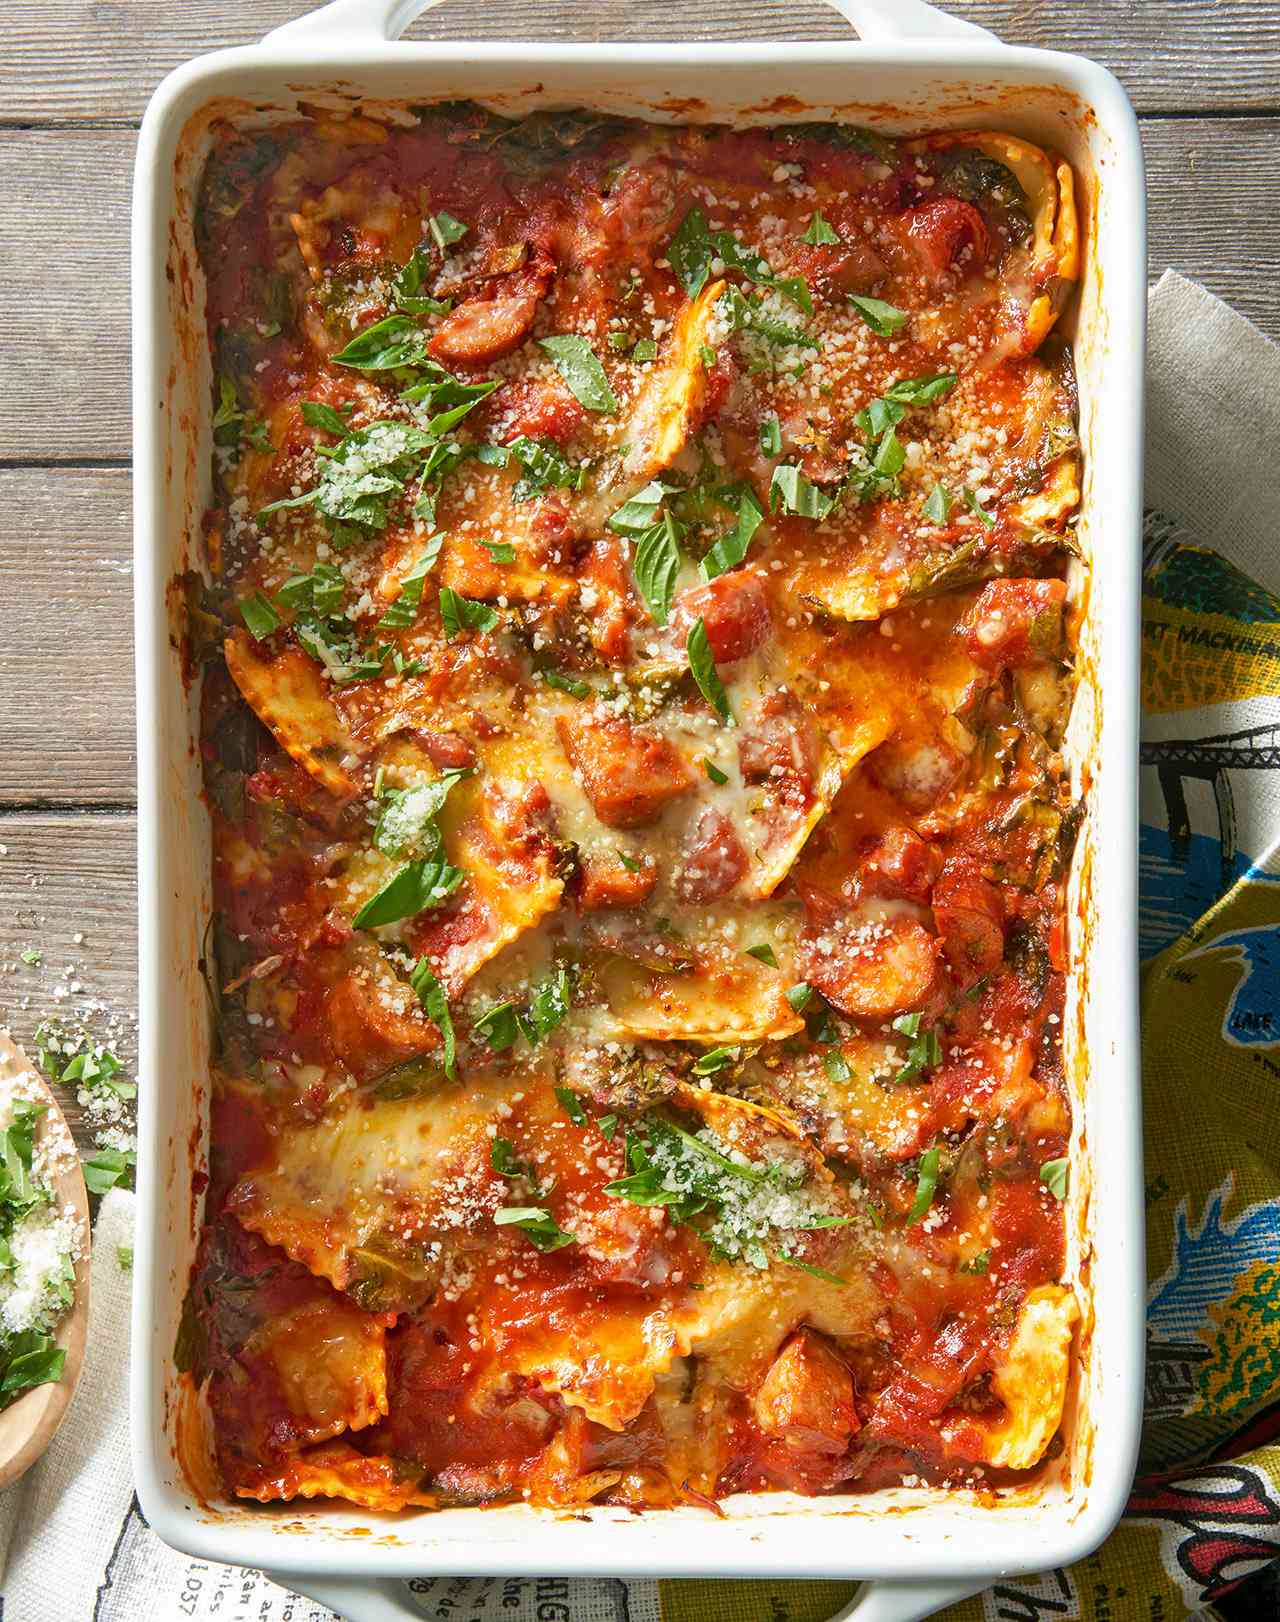 Ravioli Lasagna with Baby Kale and Italian Sausage